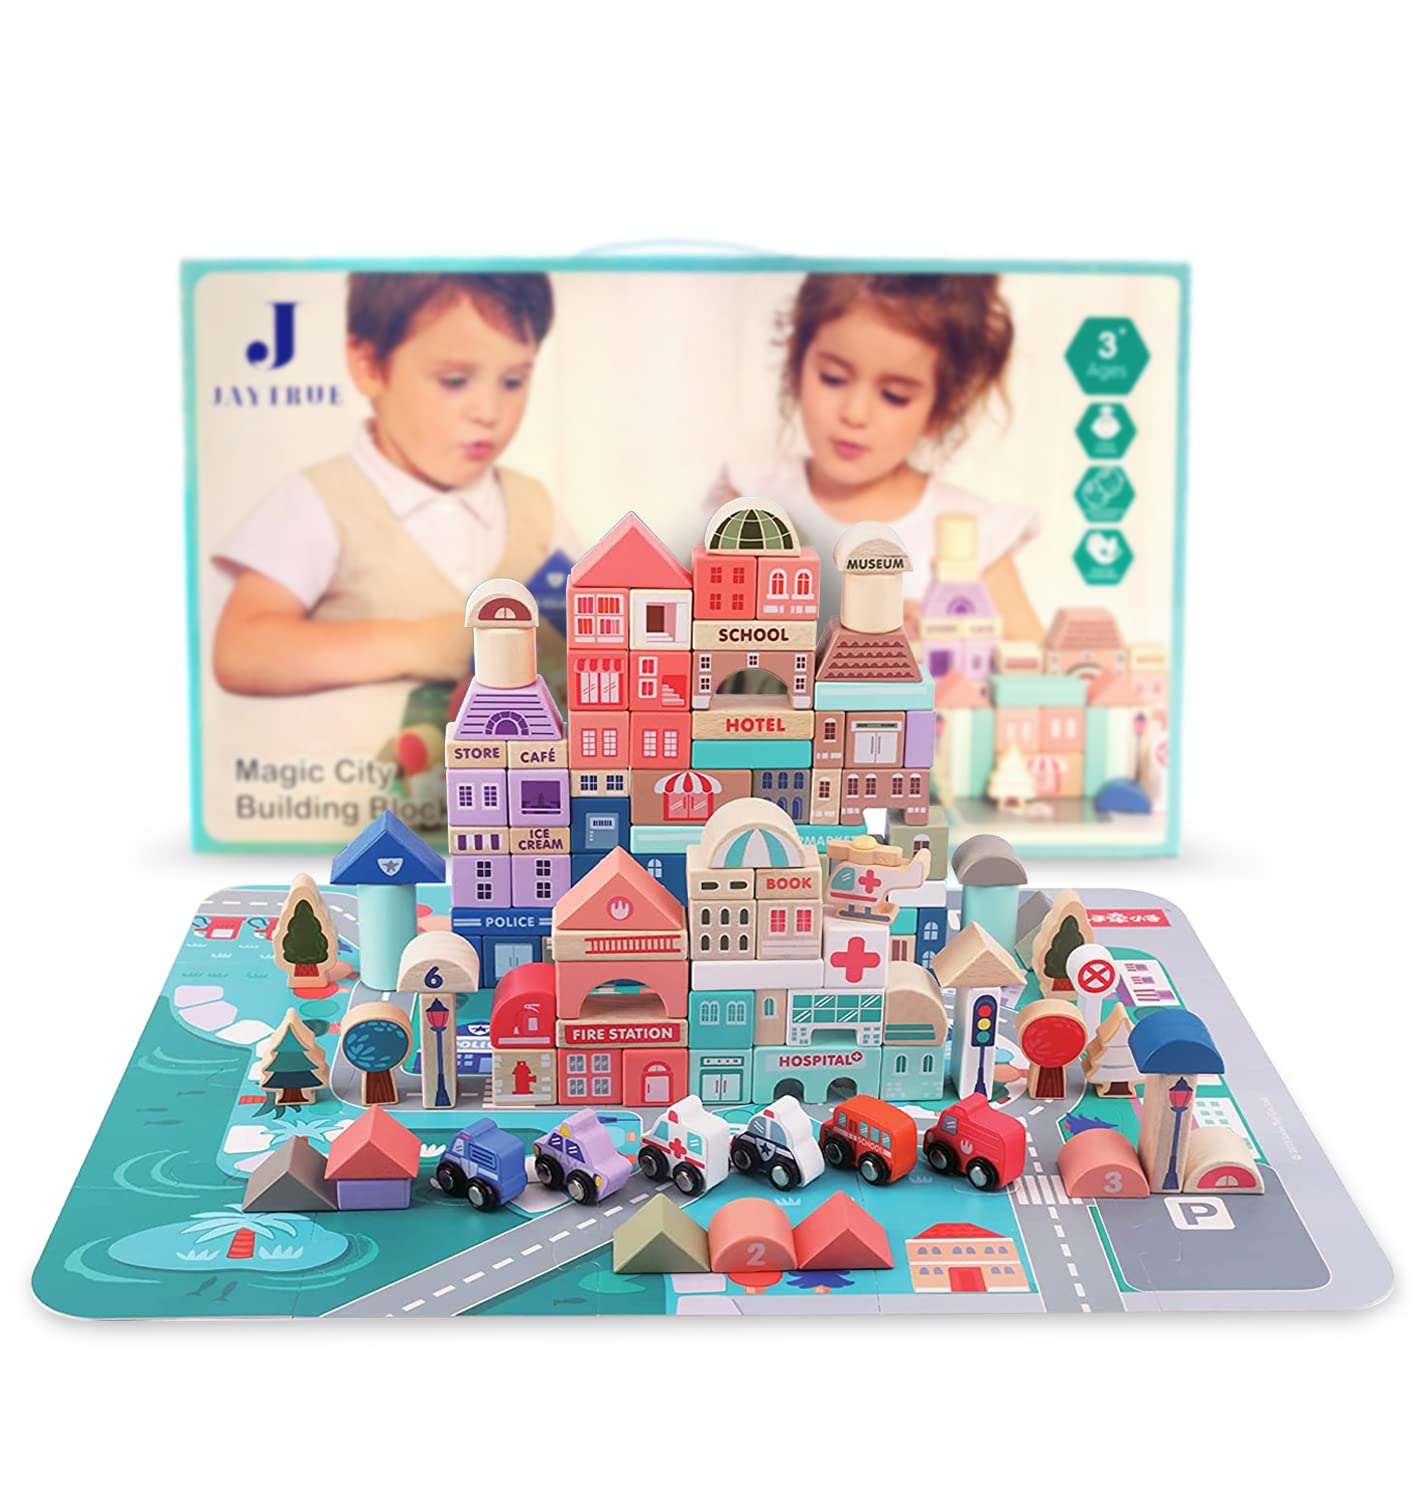 Jaytrue 115pc Montessori Wooden Building Block Set for Kids & Toddlers - Fun & Educational